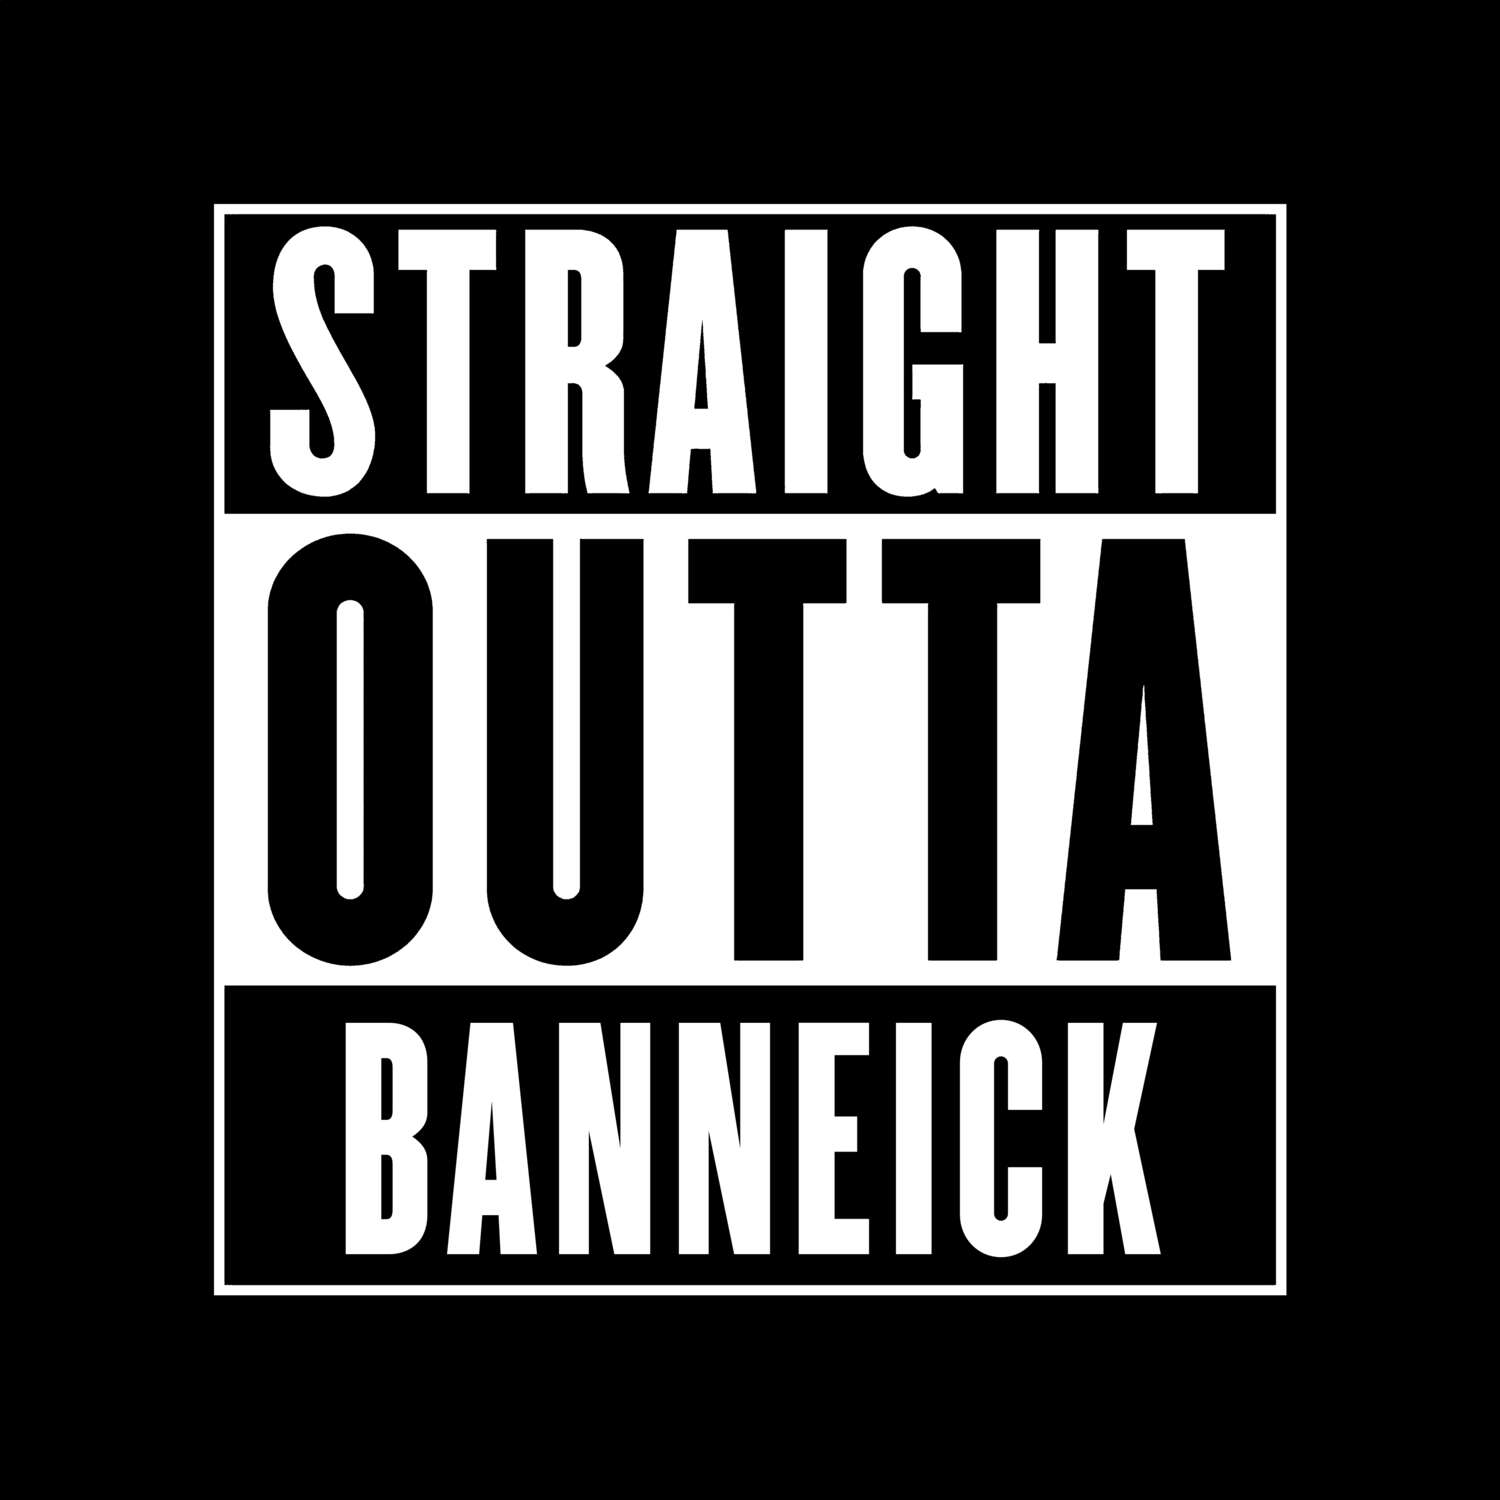 Banneick T-Shirt »Straight Outta«